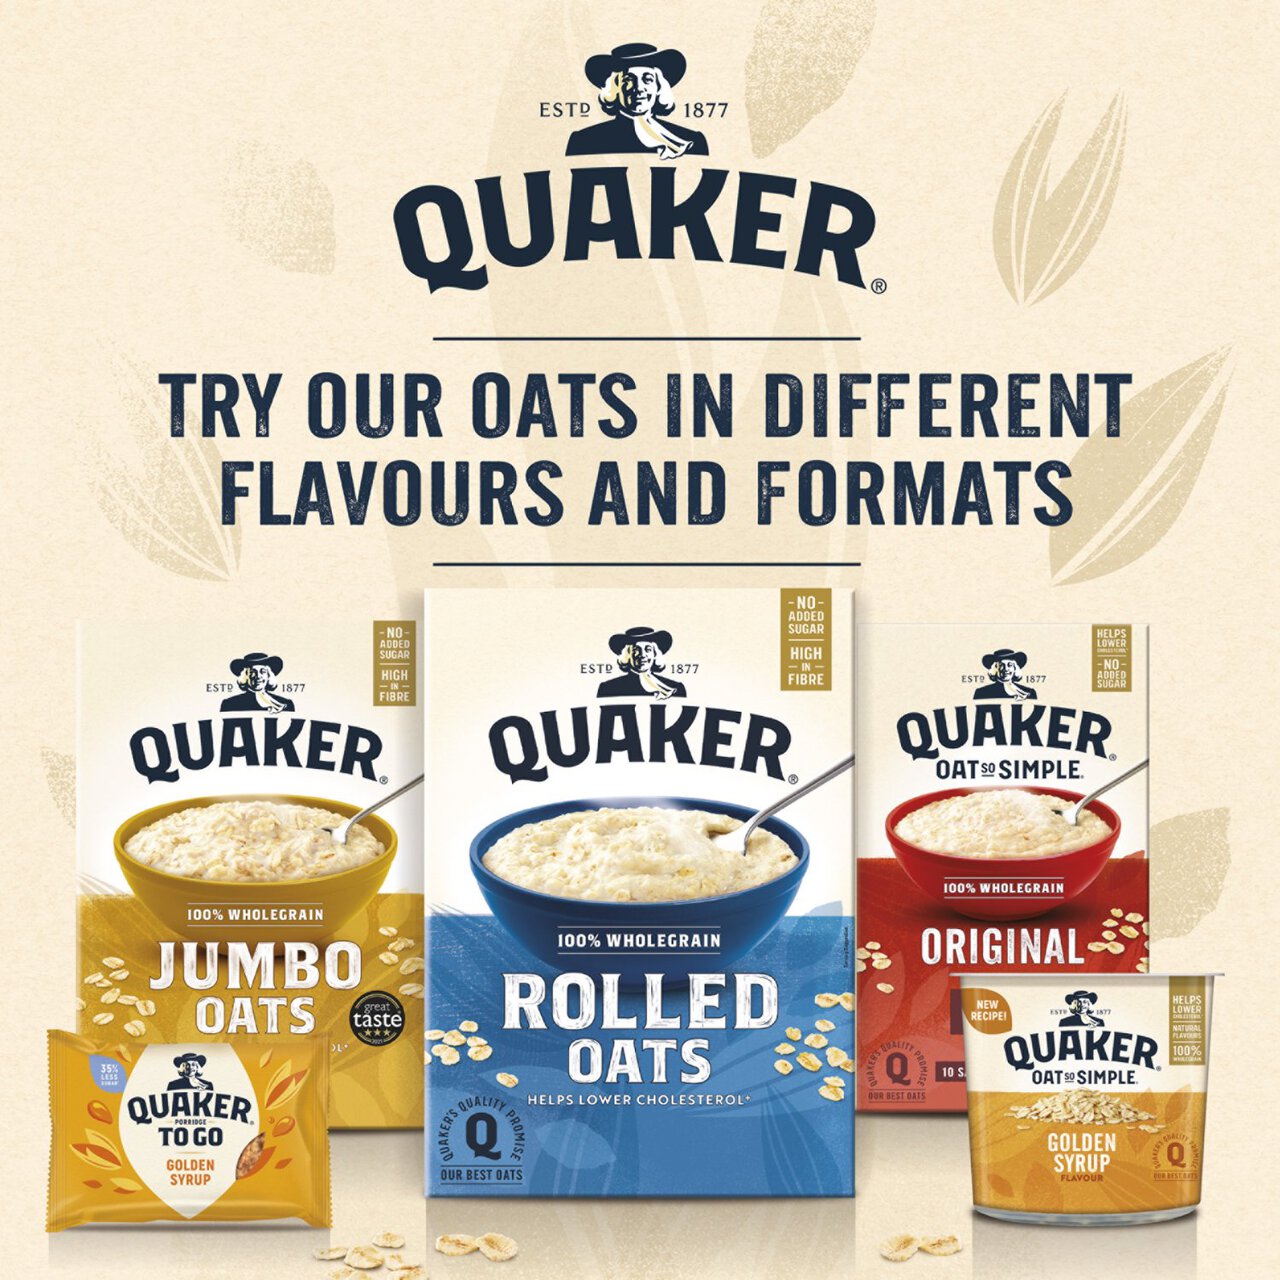 Quaker Oat So Simple Family Pack Original Porridge Sachets Cereal 20 per pack